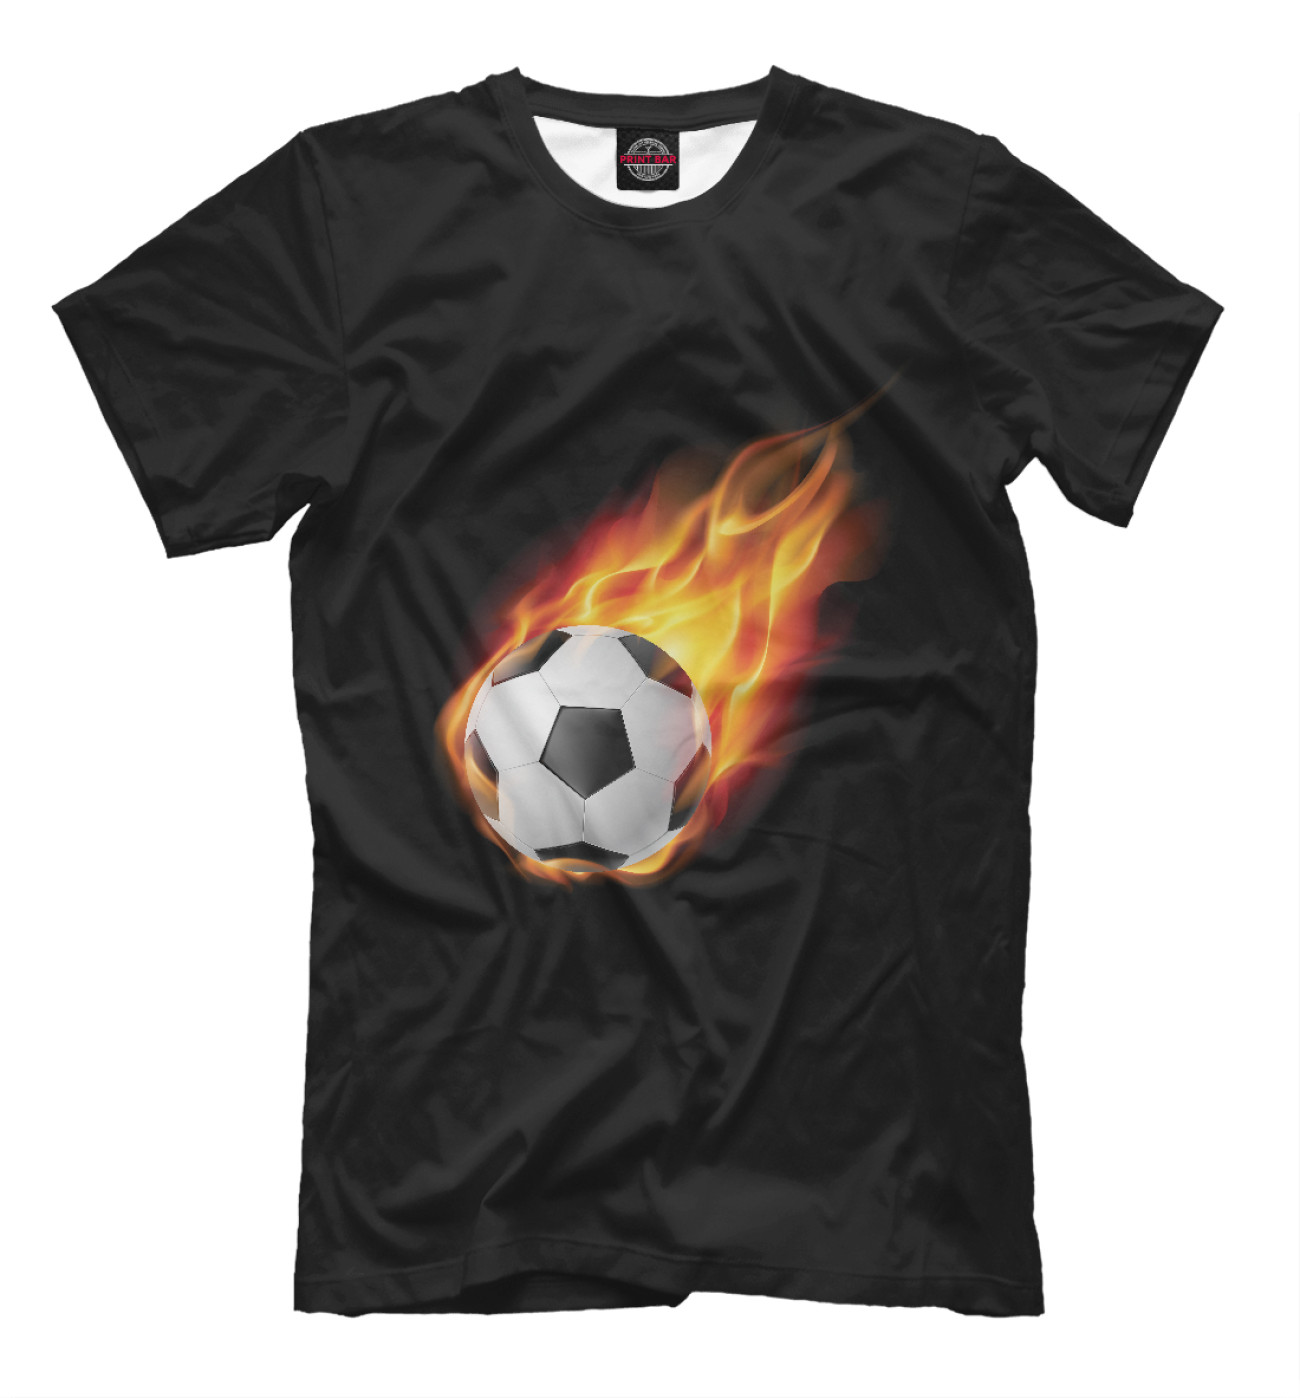 Мужская Футболка Огненный мяч, артикул: FTO-427023-fut-2